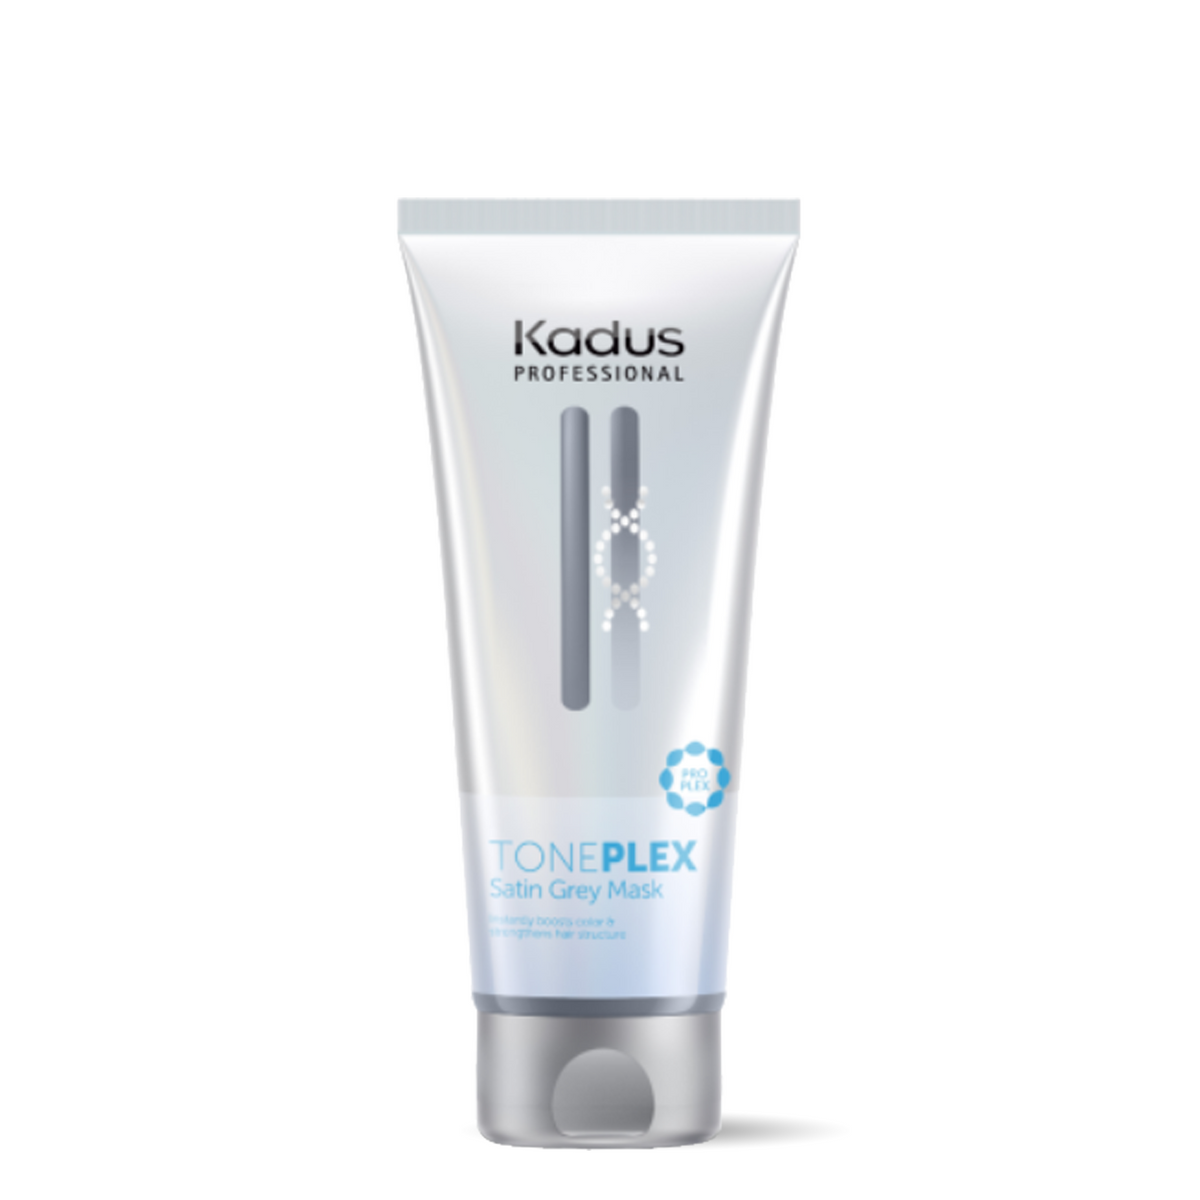 Kadus Toneplex Satin Grey Mask 200ml - by Kadus Professionals |ProCare Outlet|